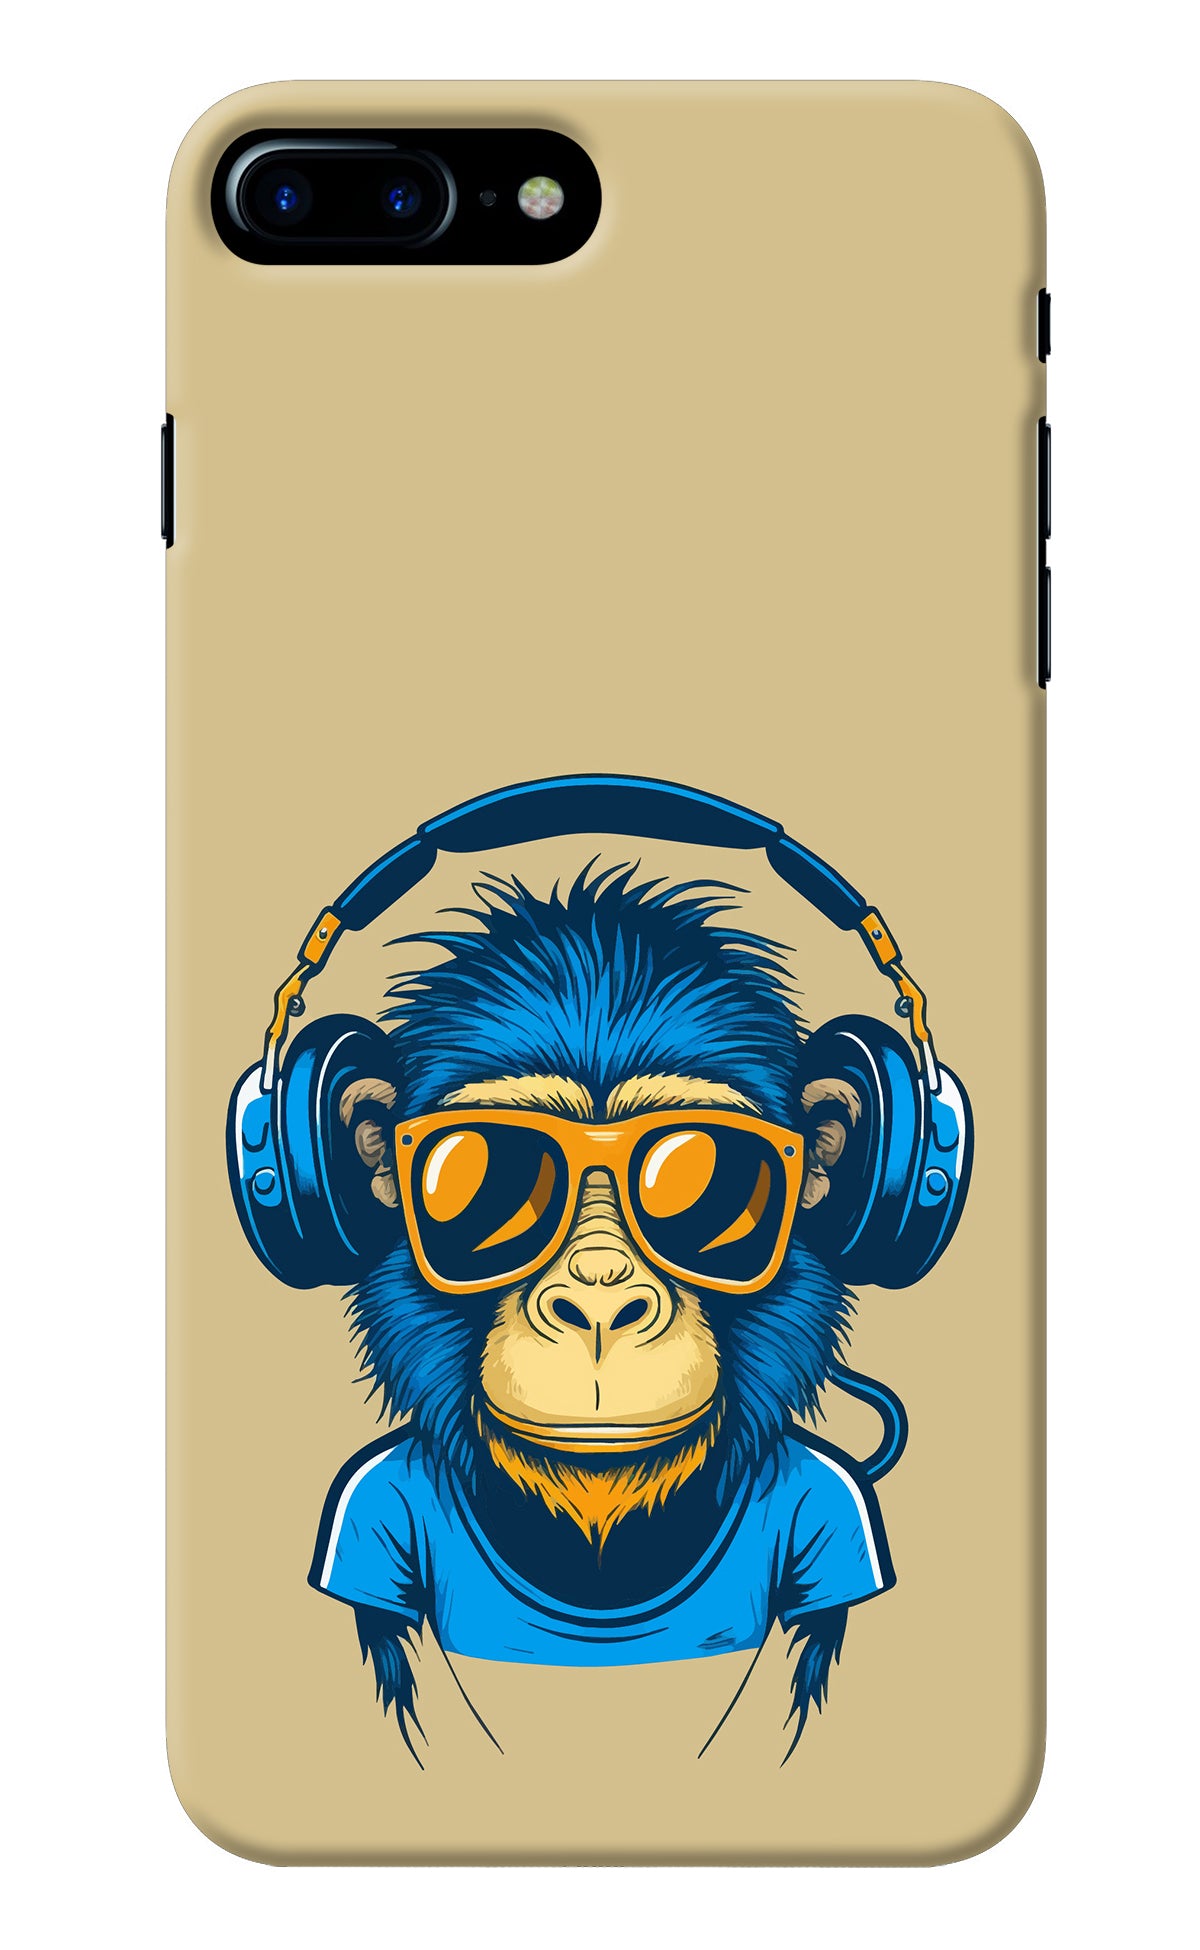 Monkey Headphone iPhone 8 Plus Back Cover